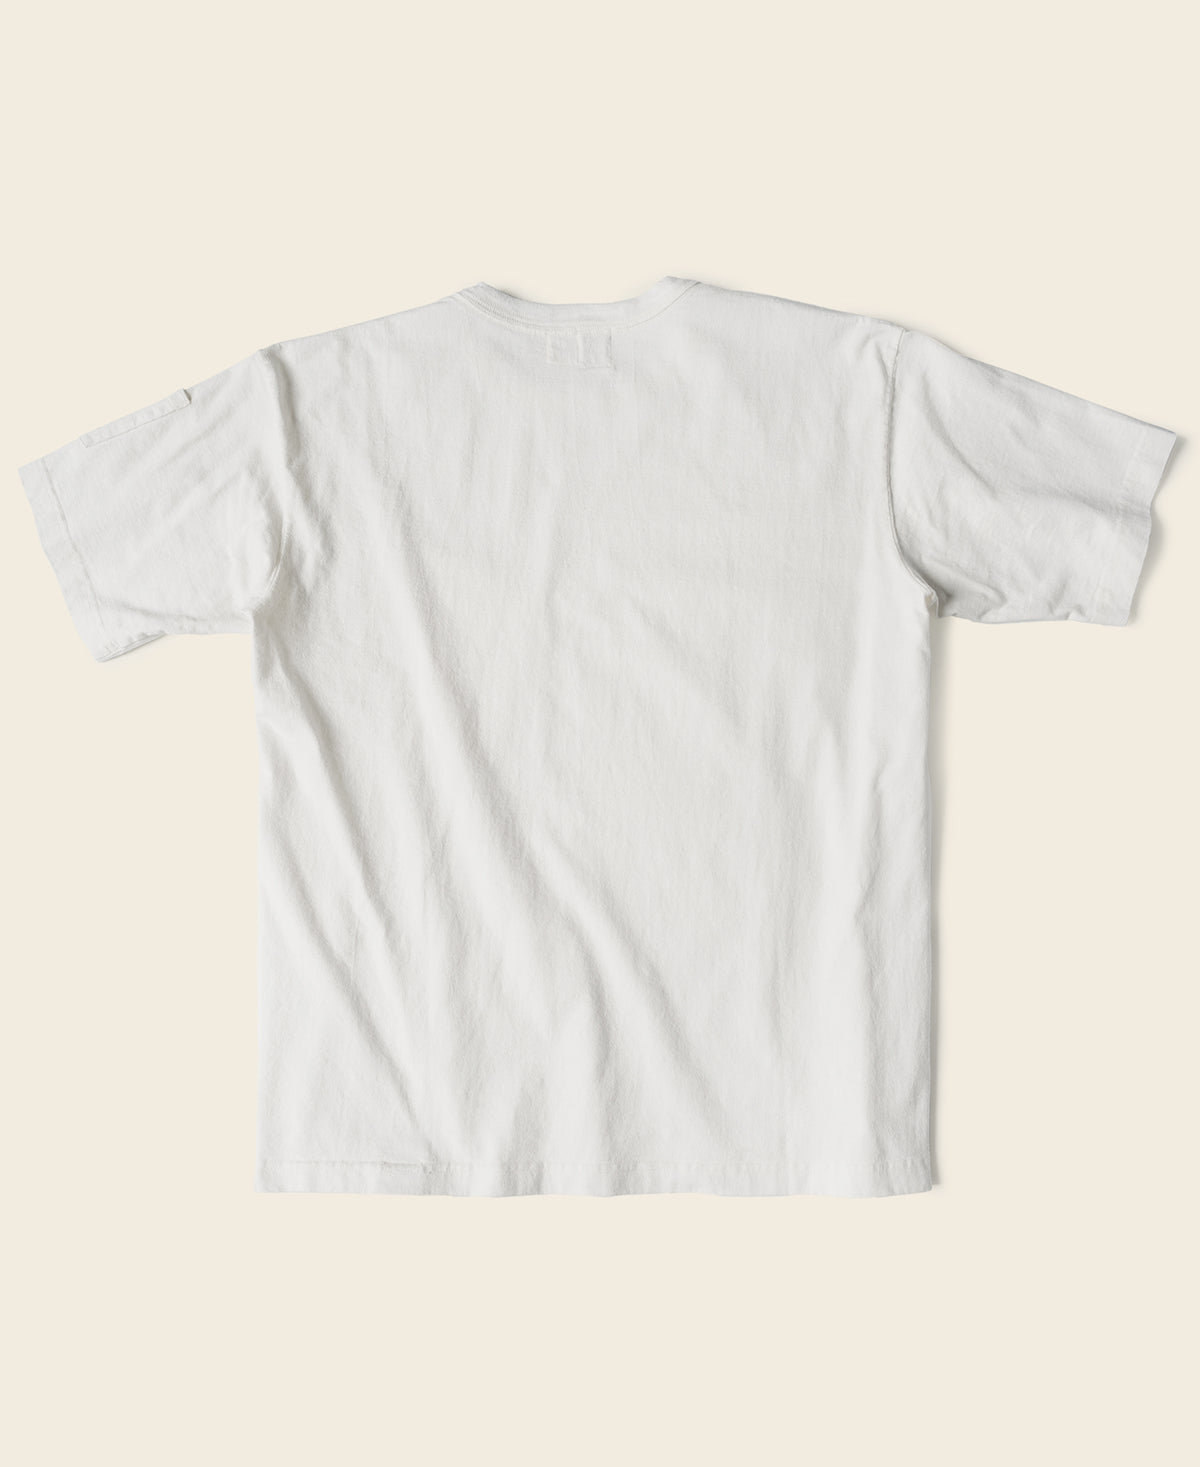 Slanted Pocket High Twist Cotton Tubular T-Shirt - White